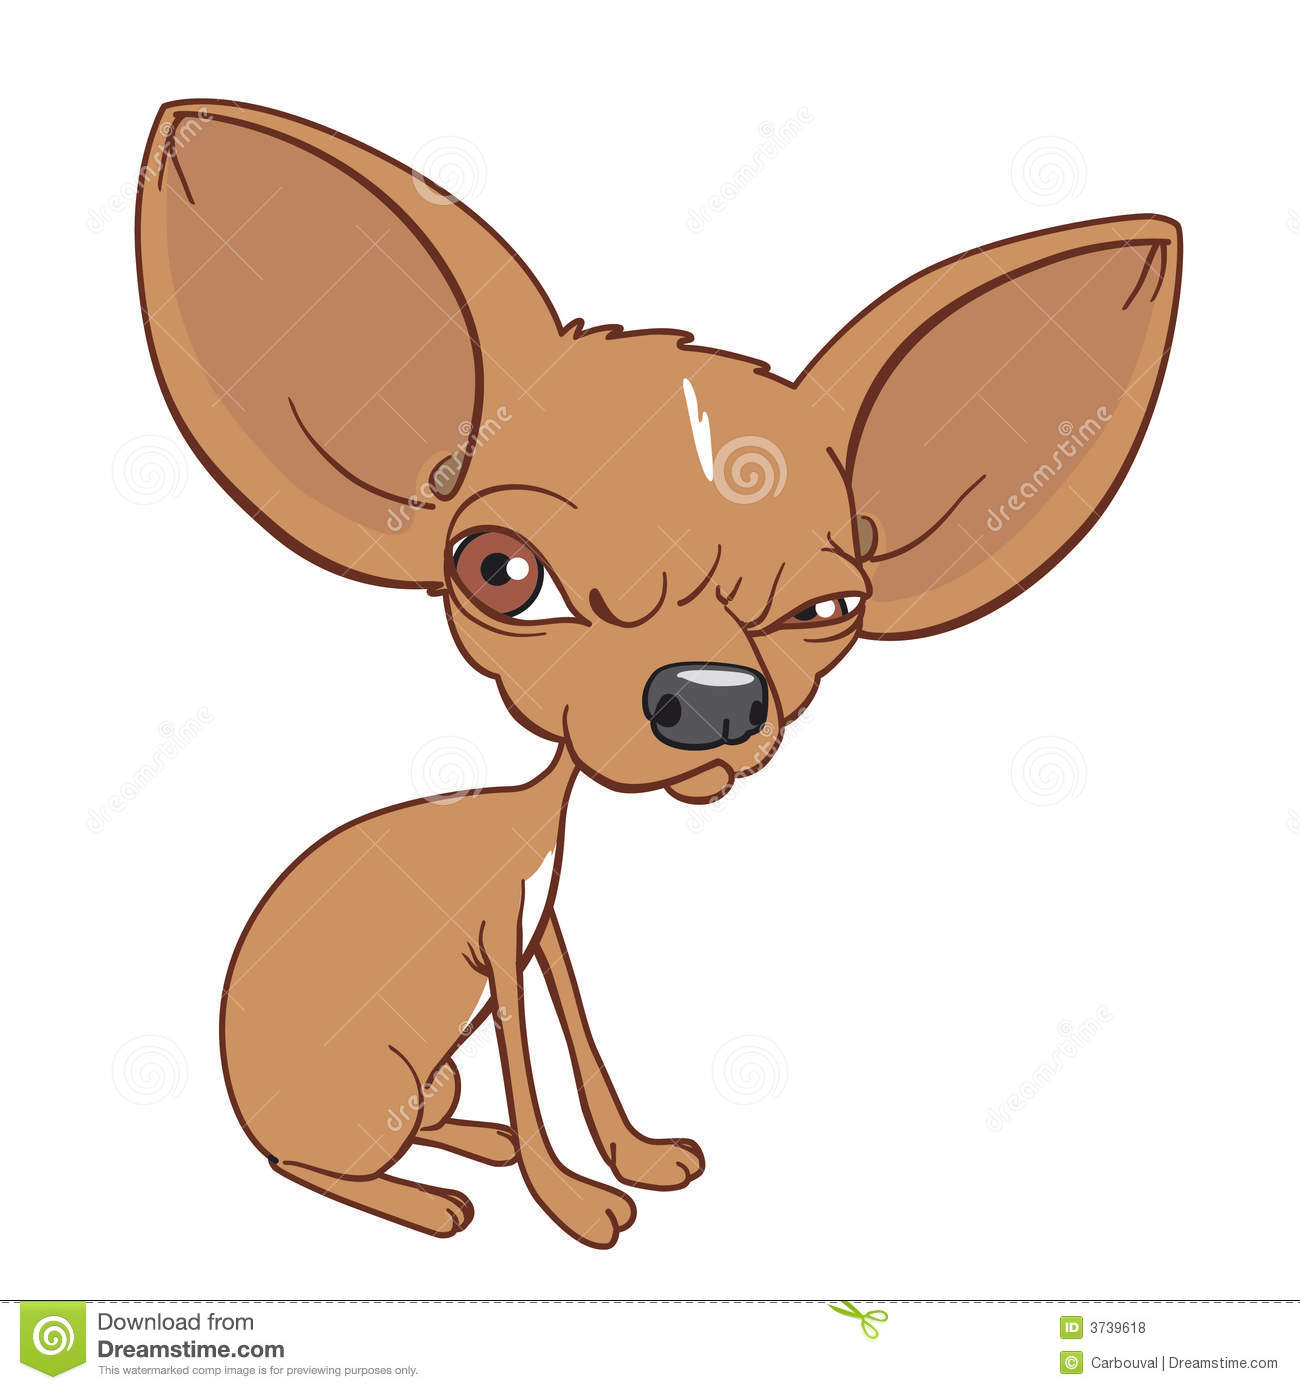 Chihuahua face